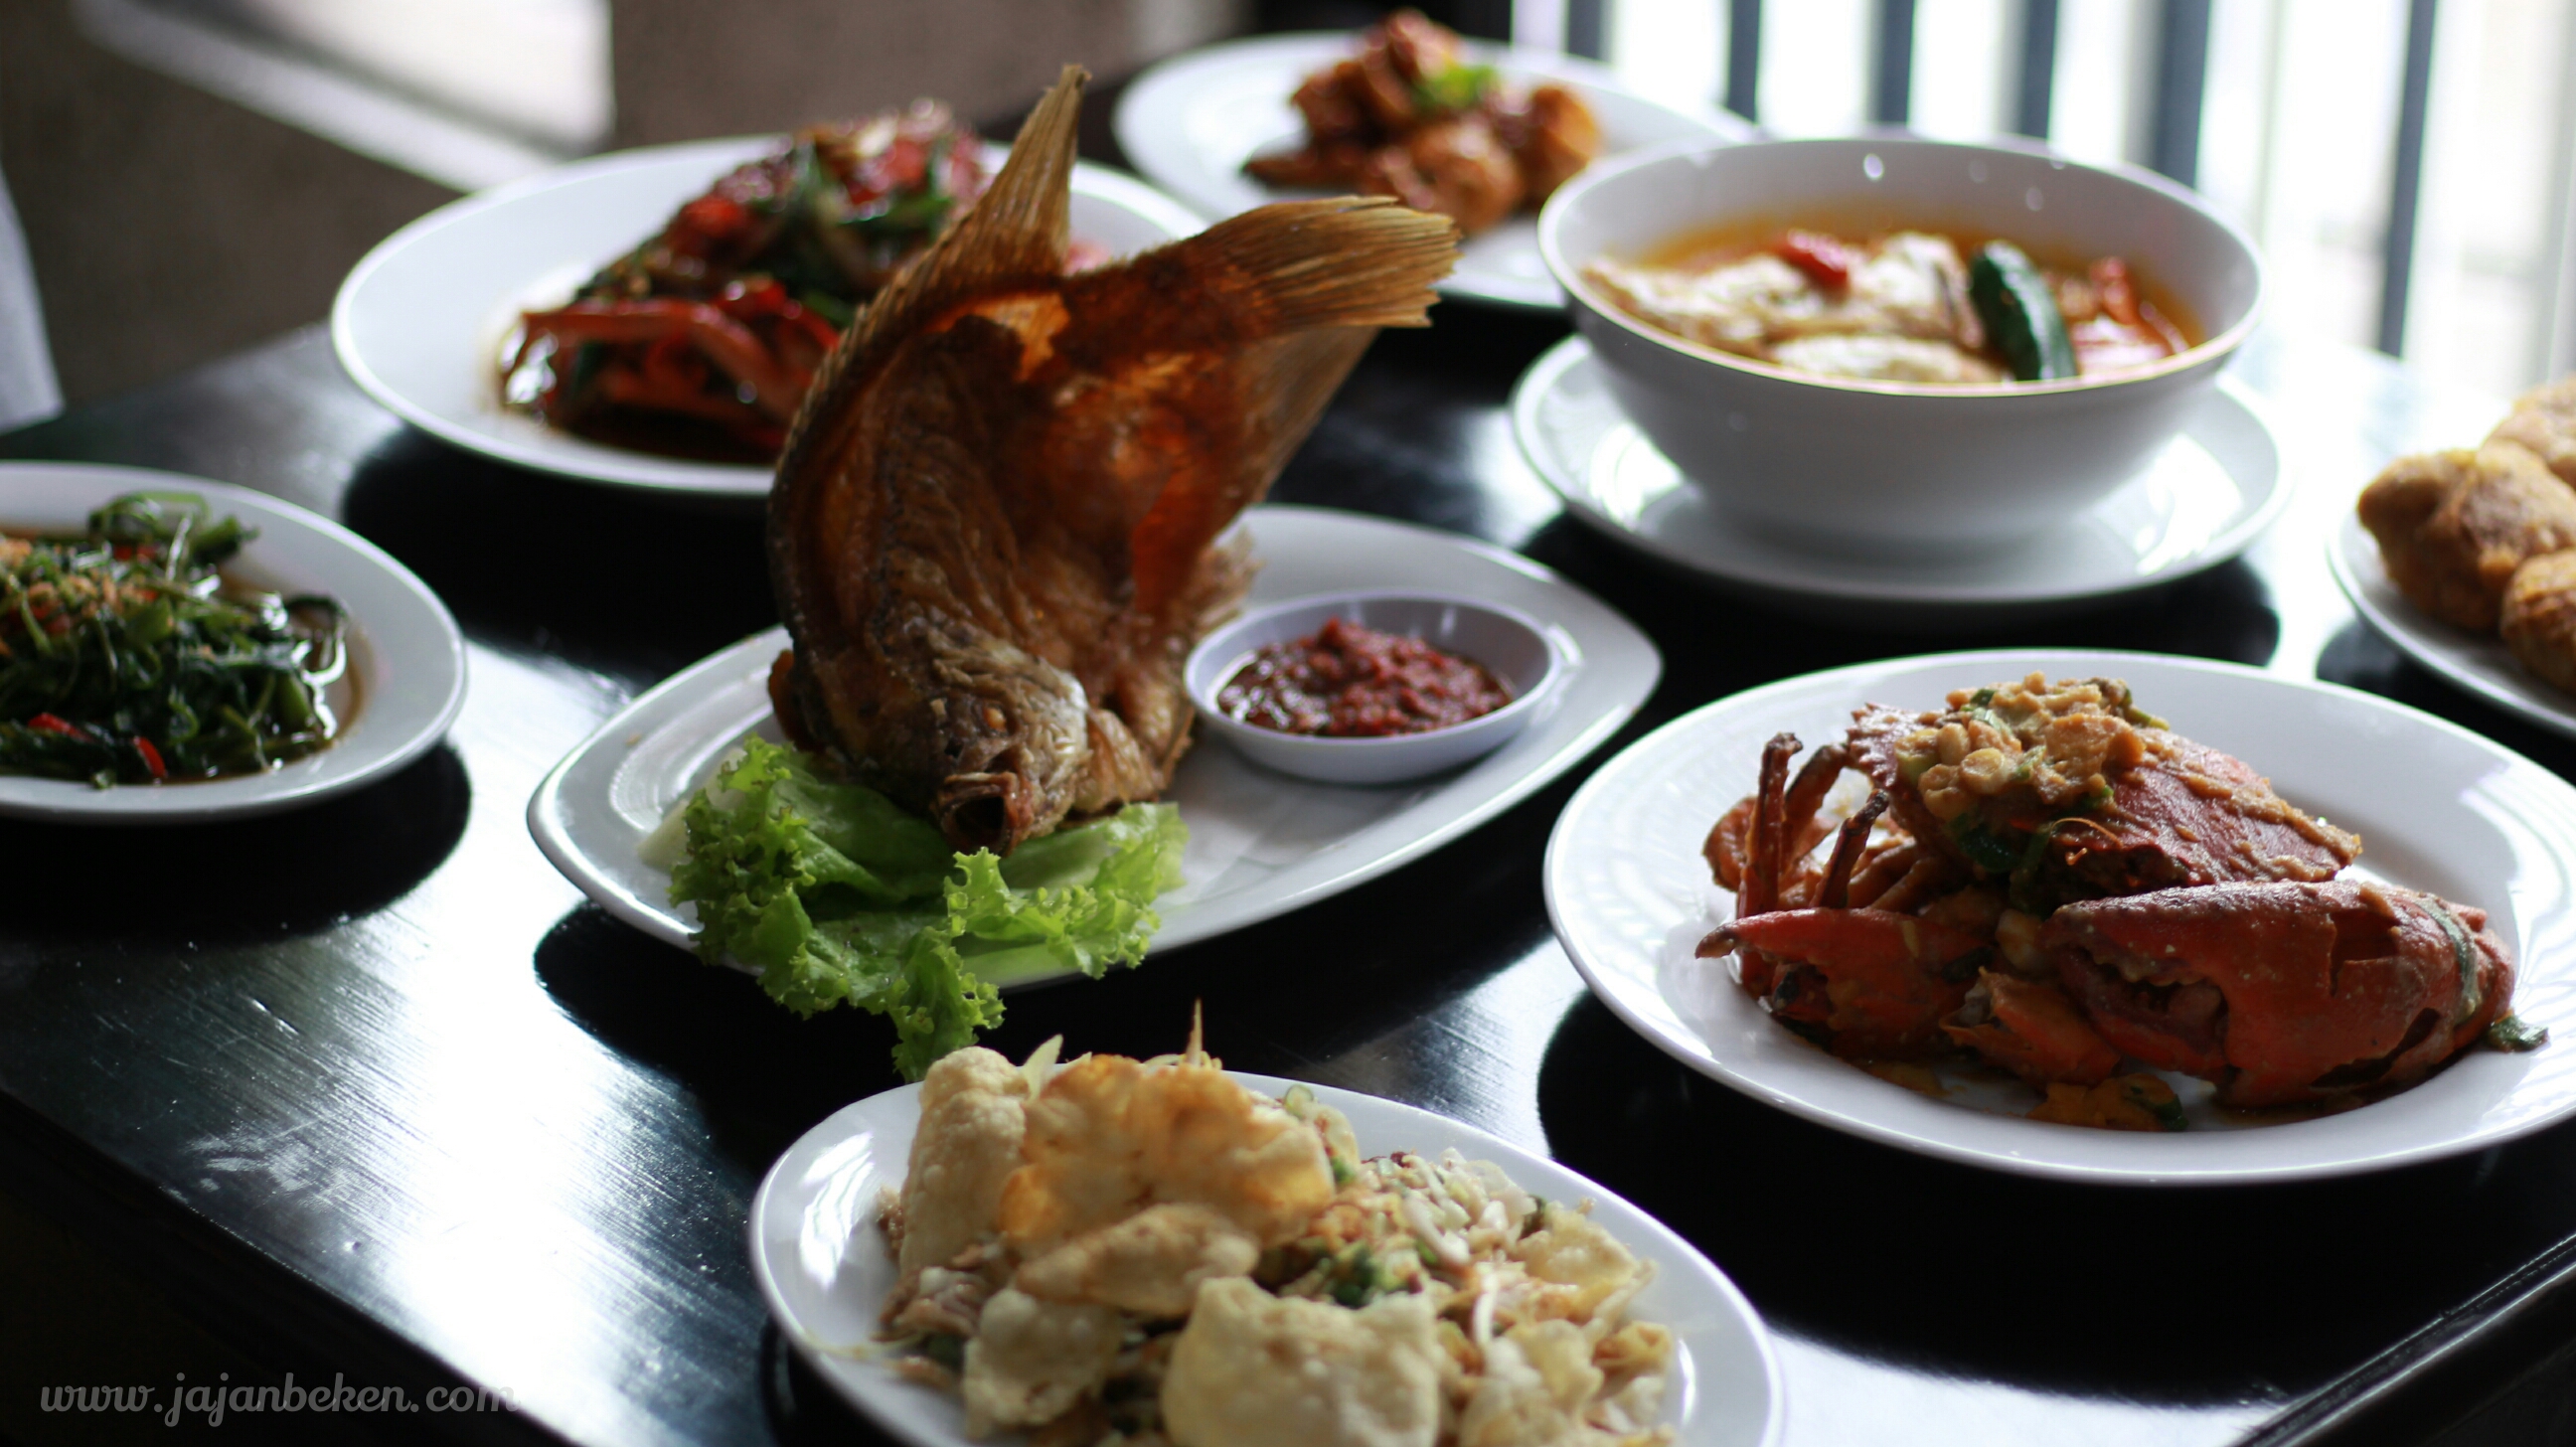 Grand Kuring Seafood Restaurant Puri Indah Jakarta Barat